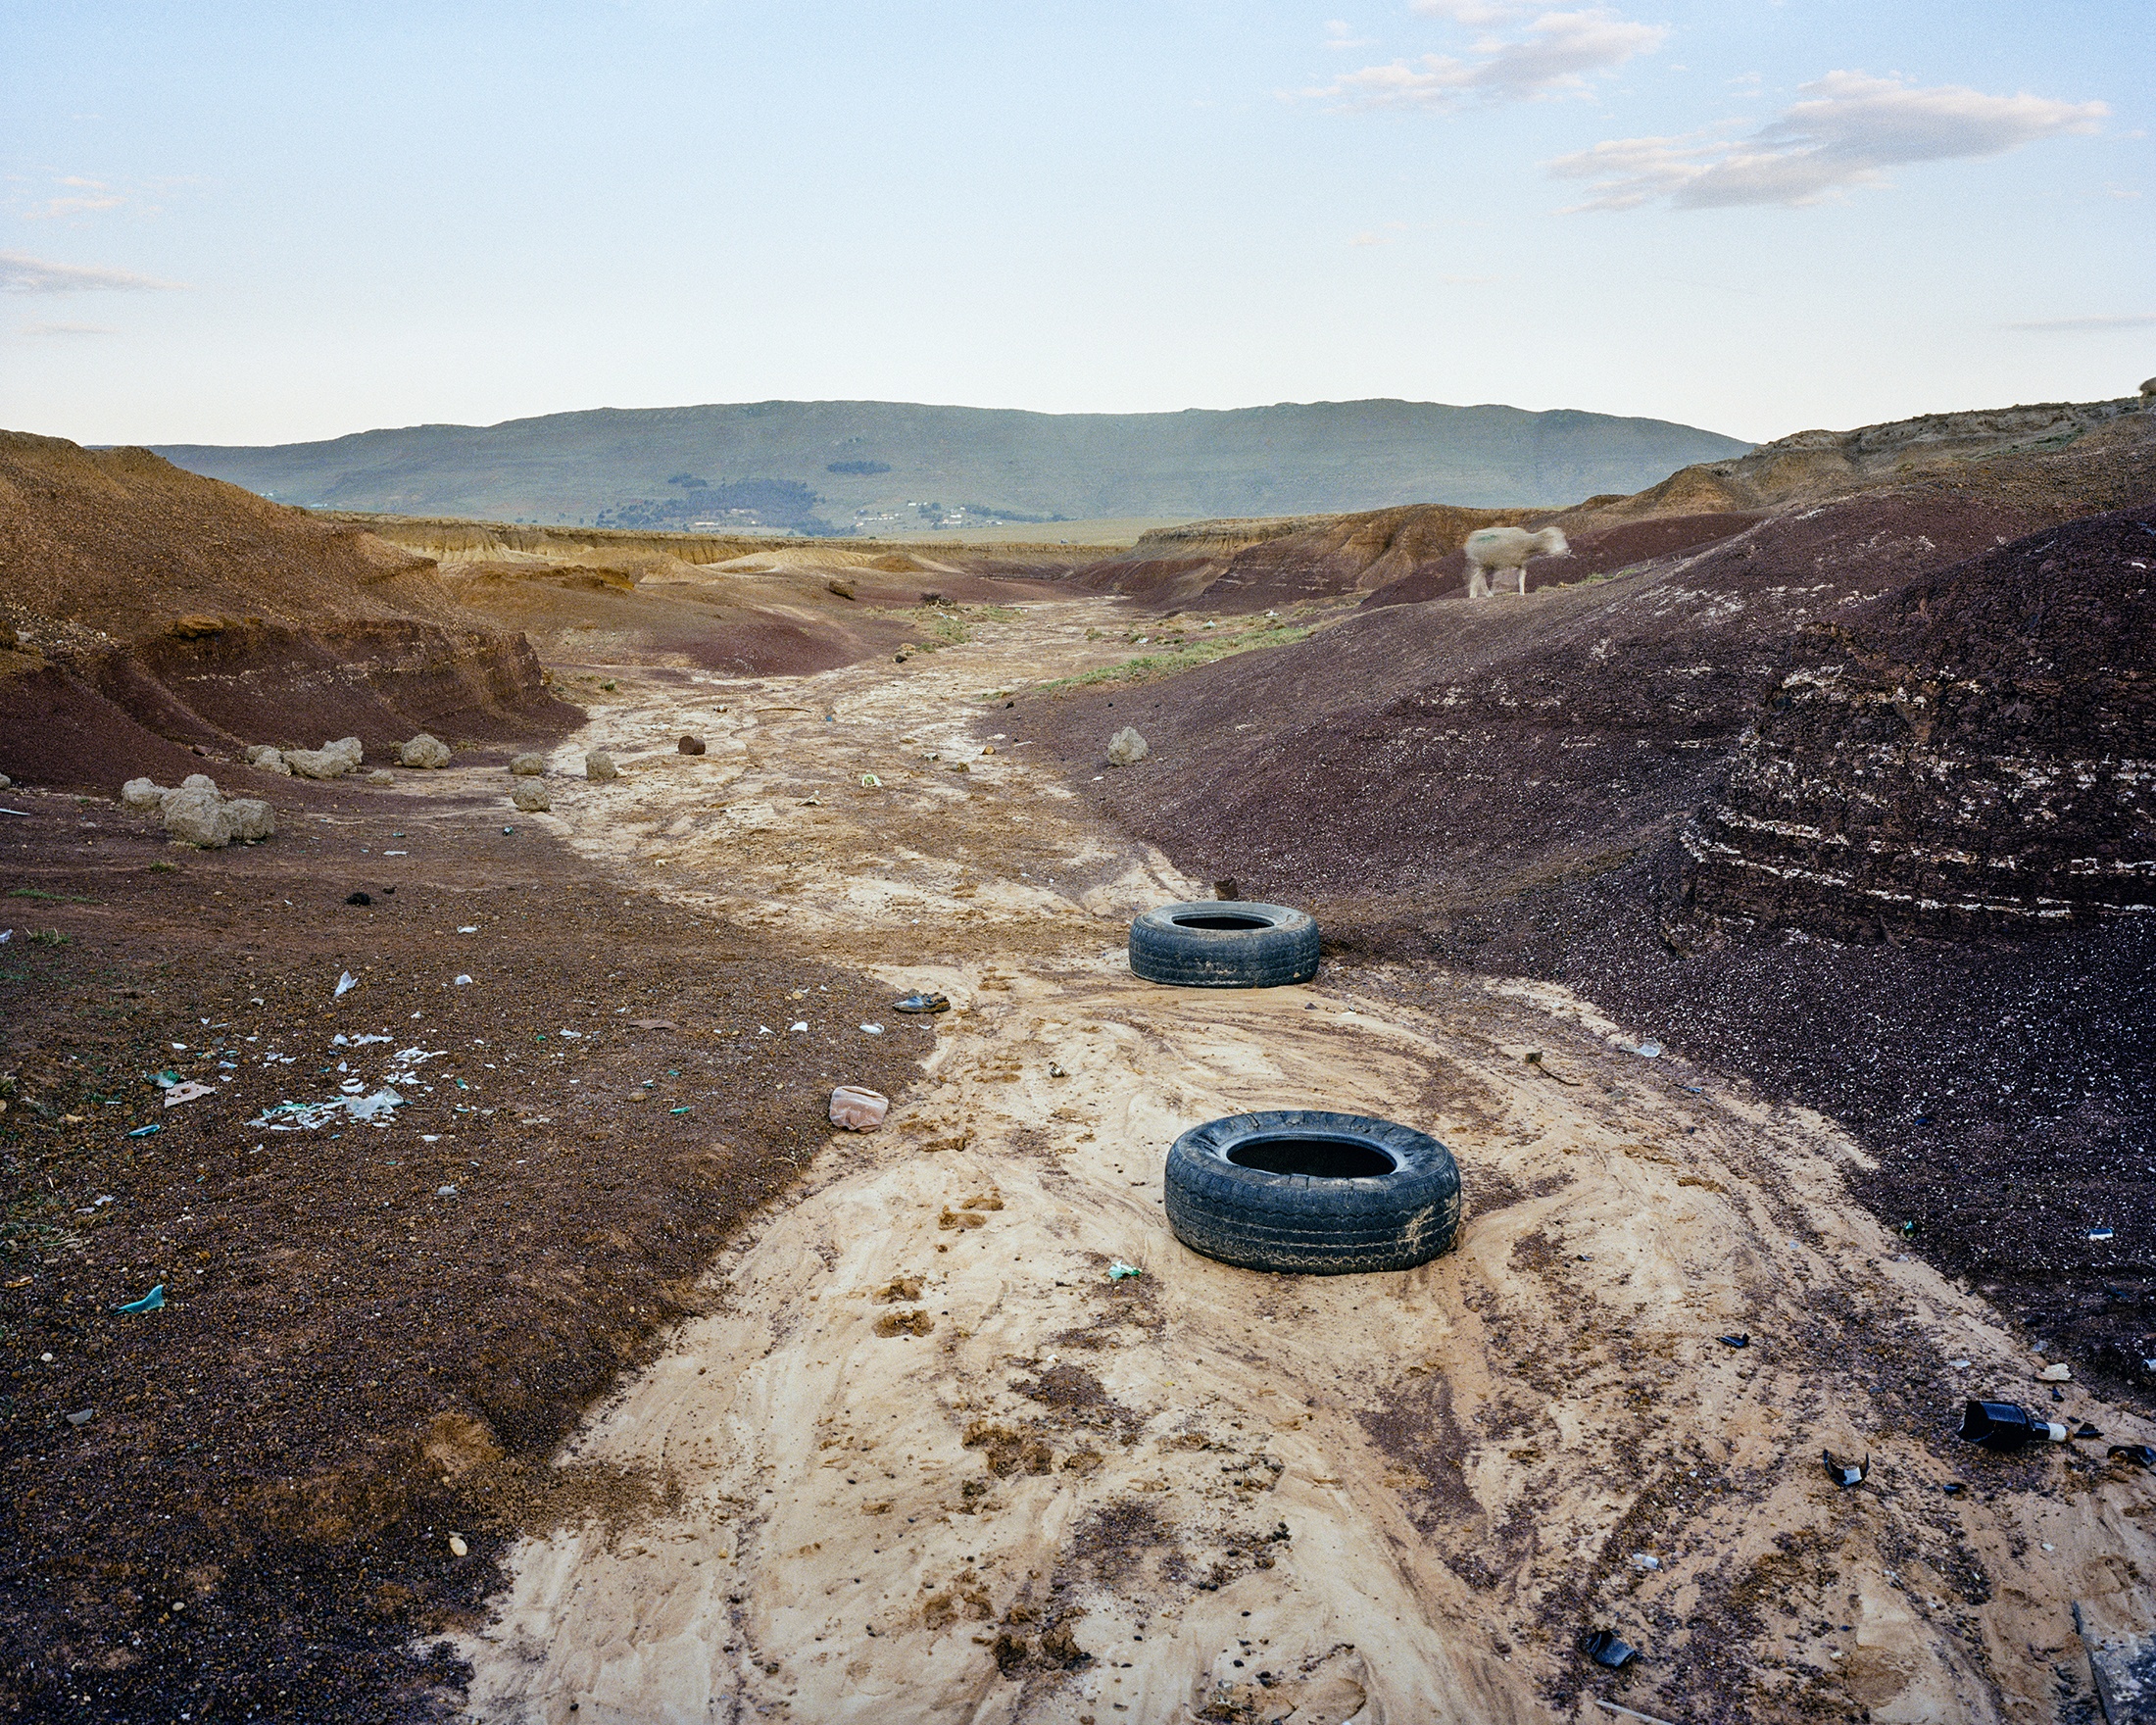 Lindokuhle Sobekwa's photograph 'Ezindongeni zase Khwezane' shows a dry riverbed with two tires lying on the sediment.
